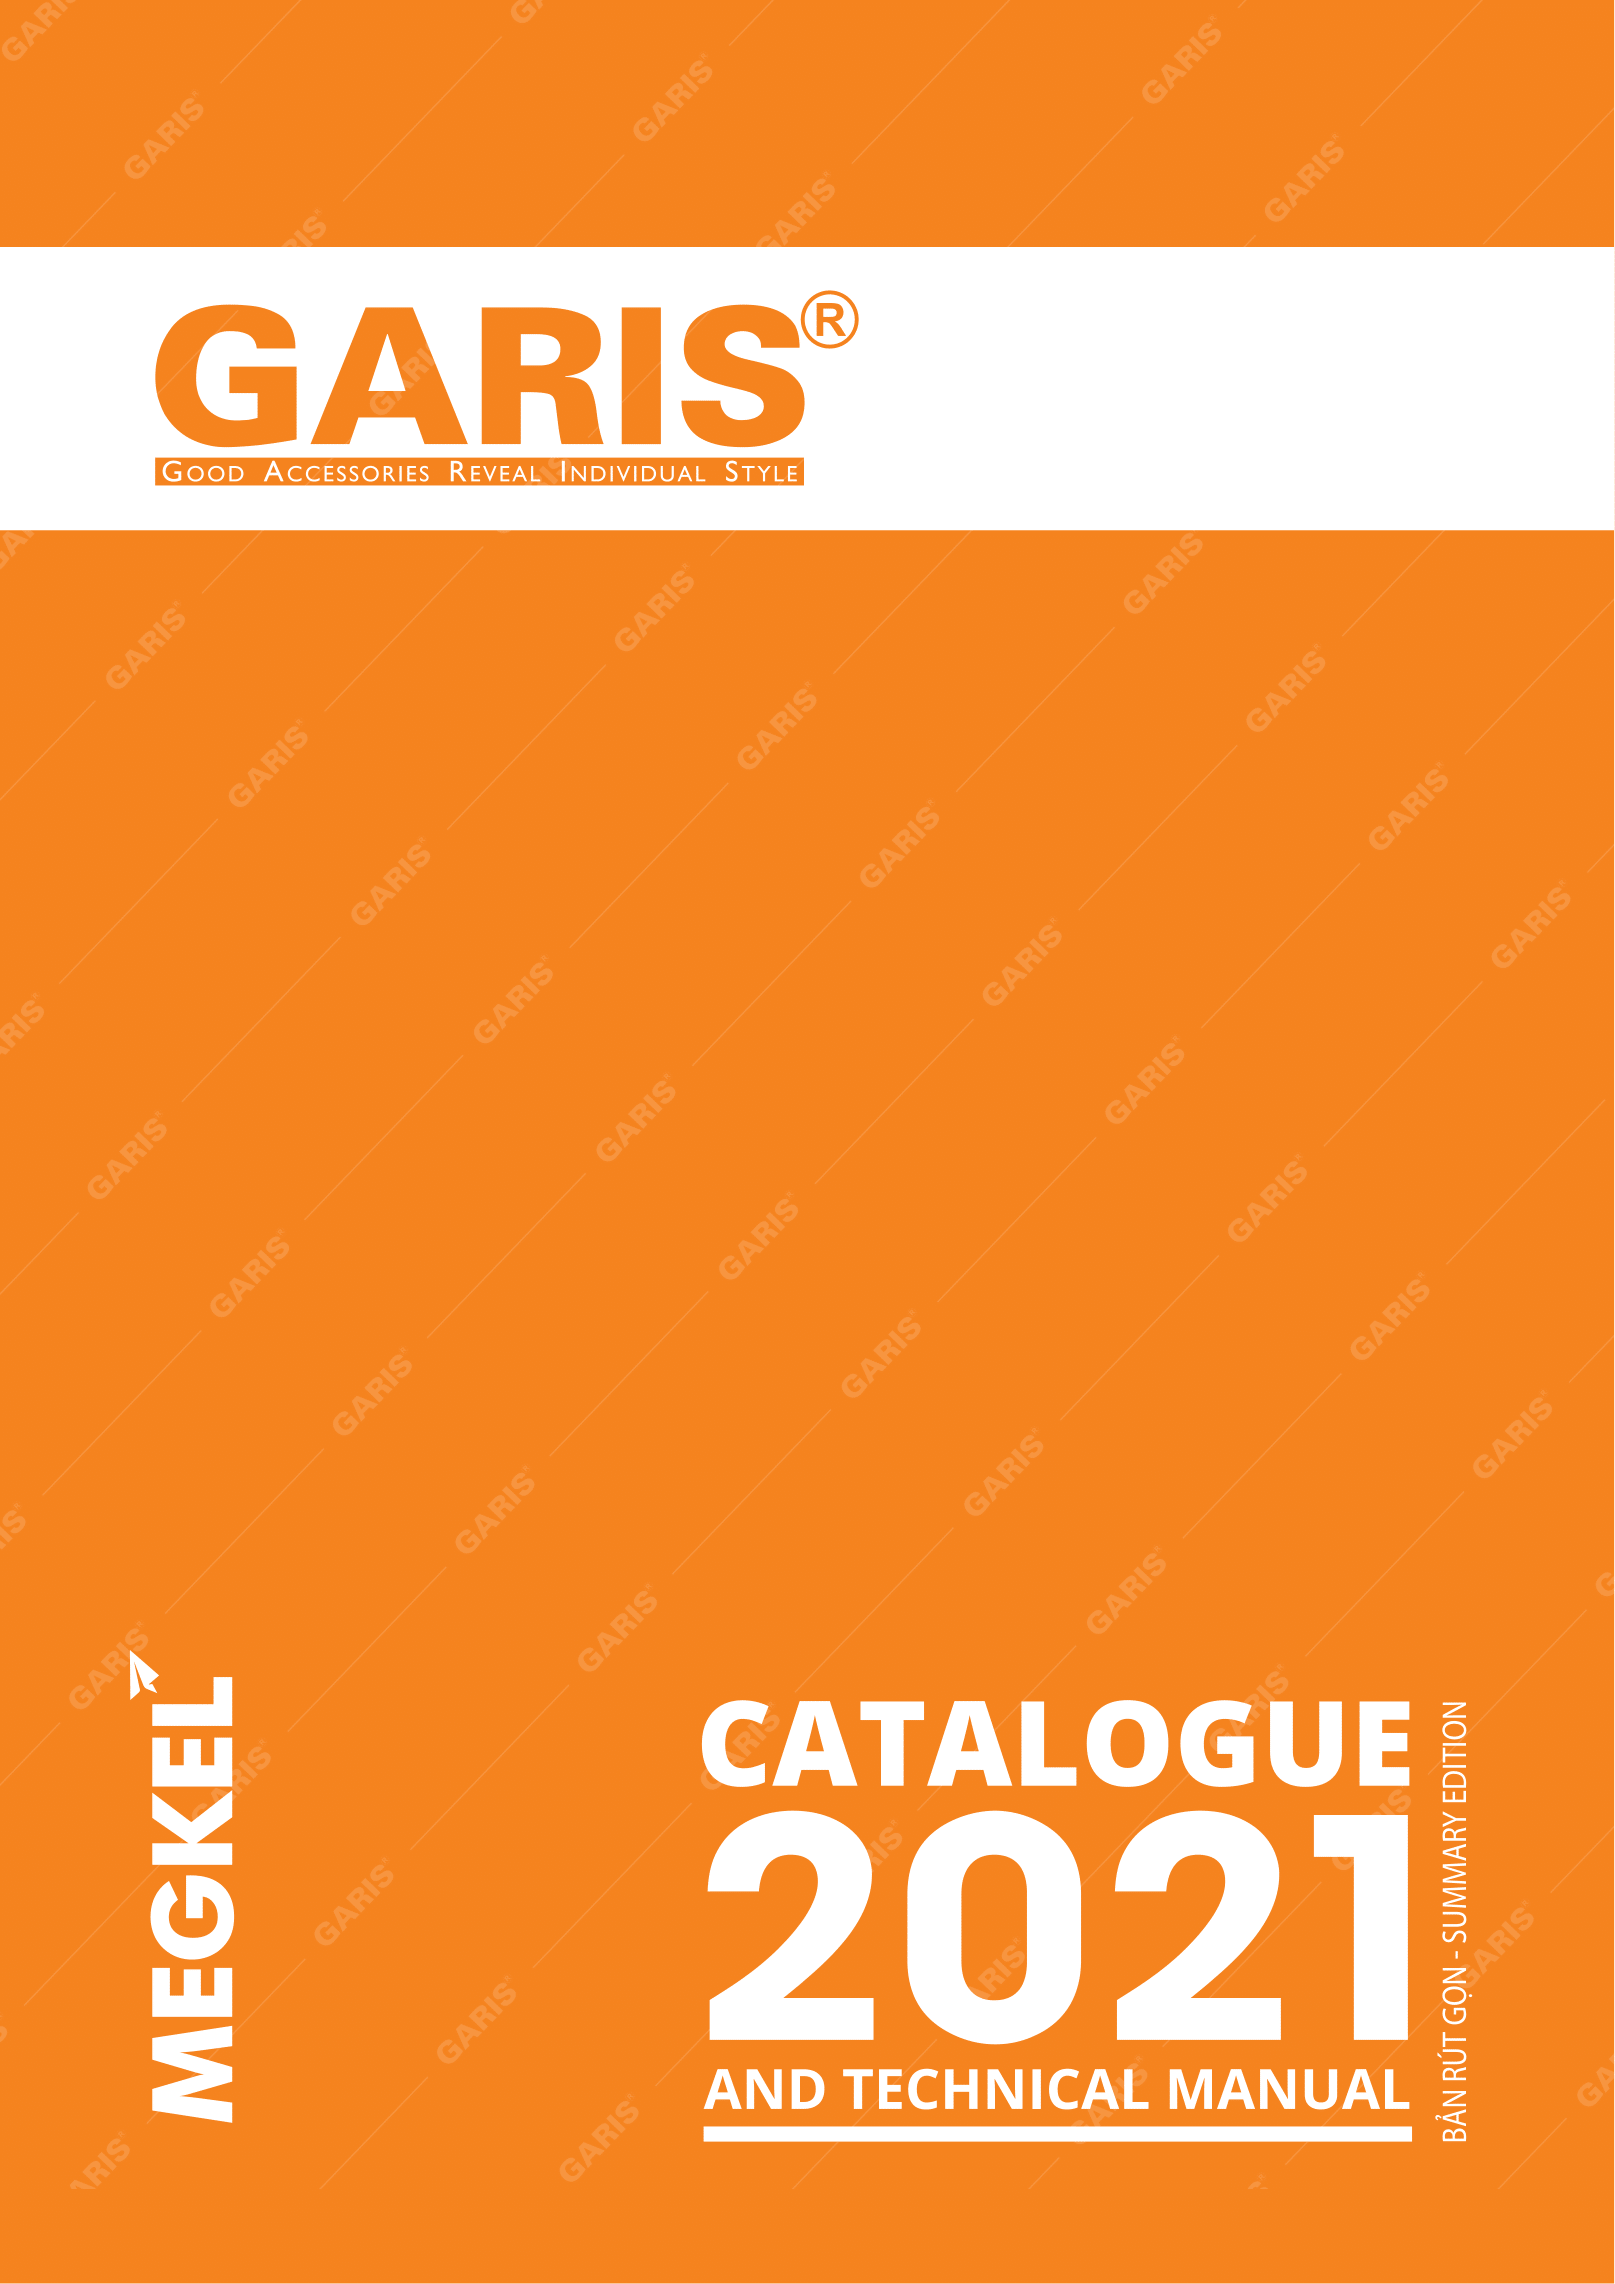 Phụ kiện bếp E-catalogue GARIS 2021 (full)